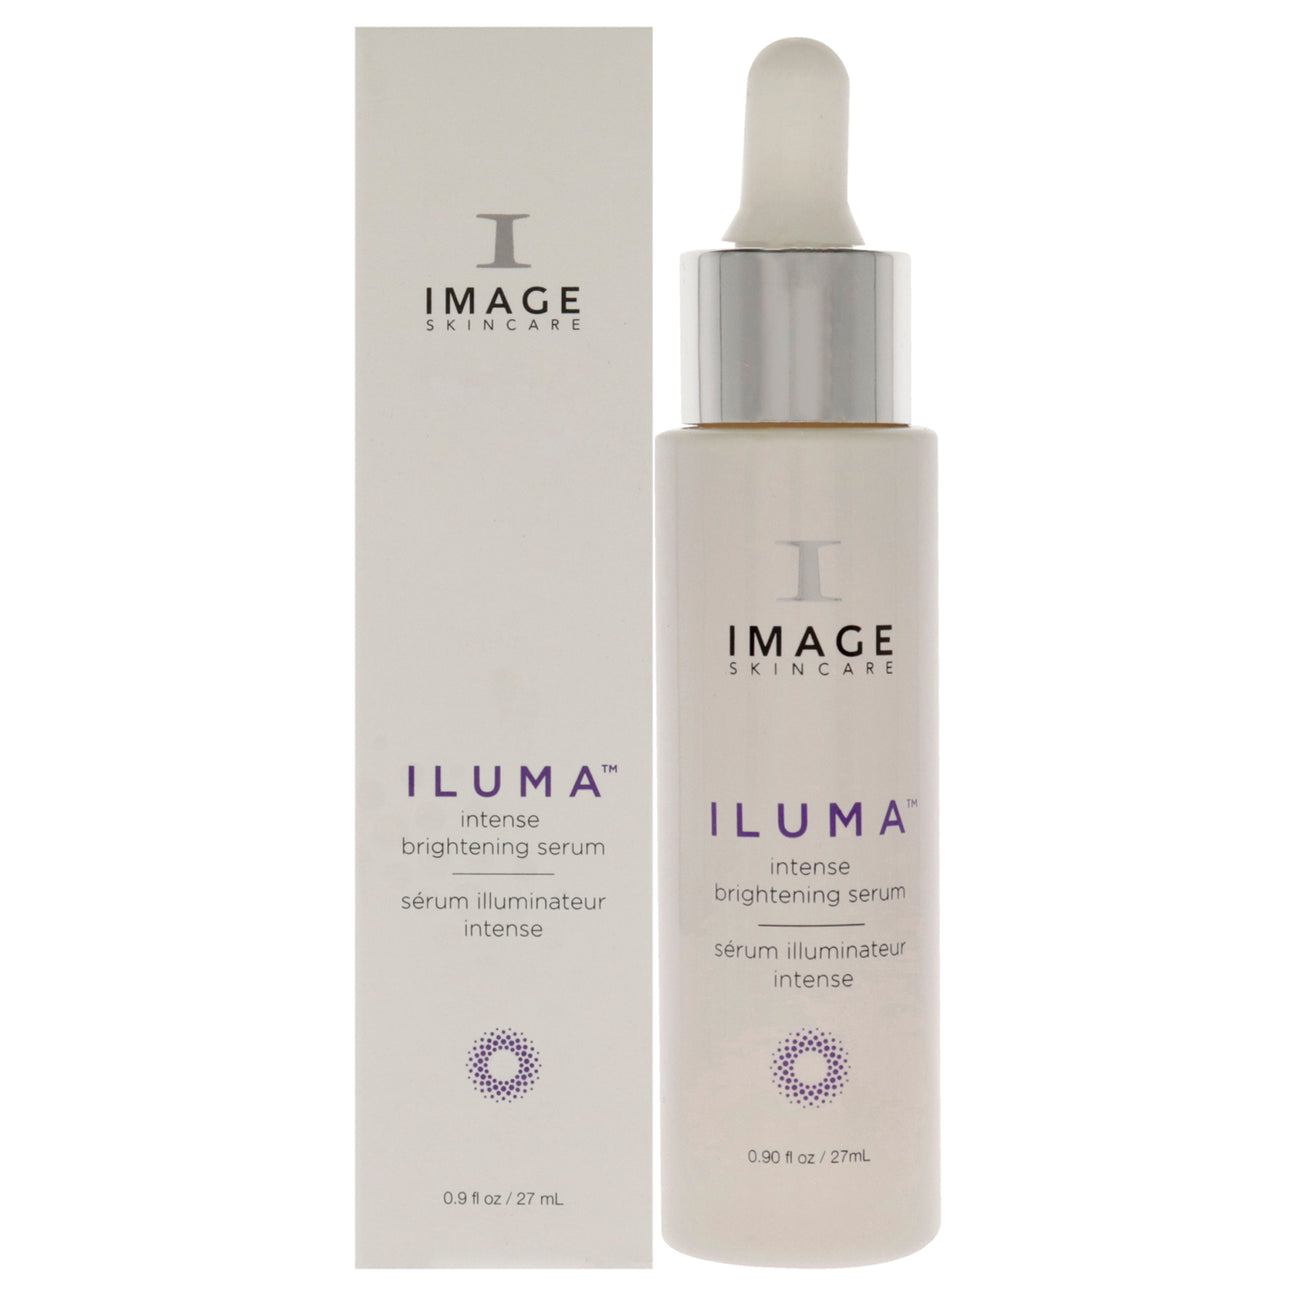 IMAGE Skincare ILUMA Intense Brightening Serum 0.9 oz